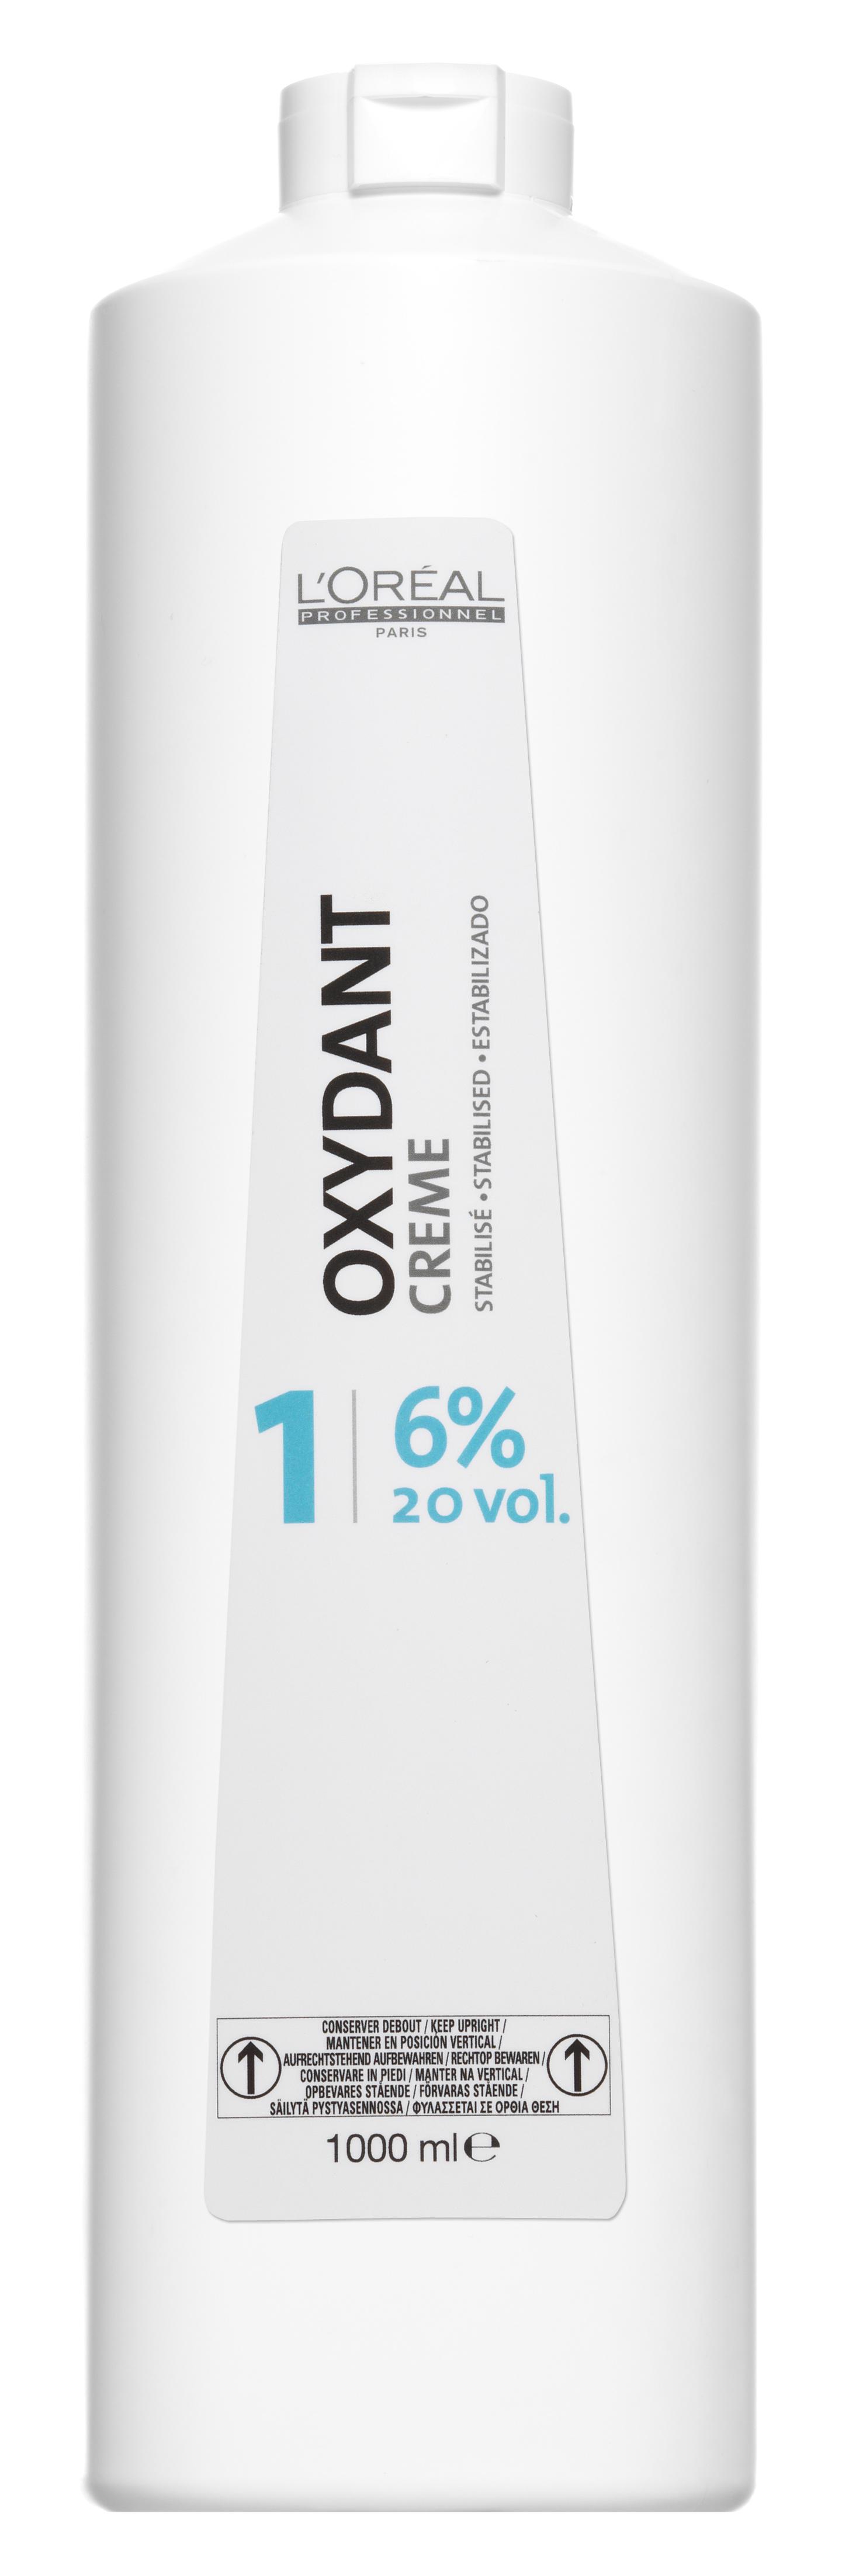 Oxydant Creme 1000ml